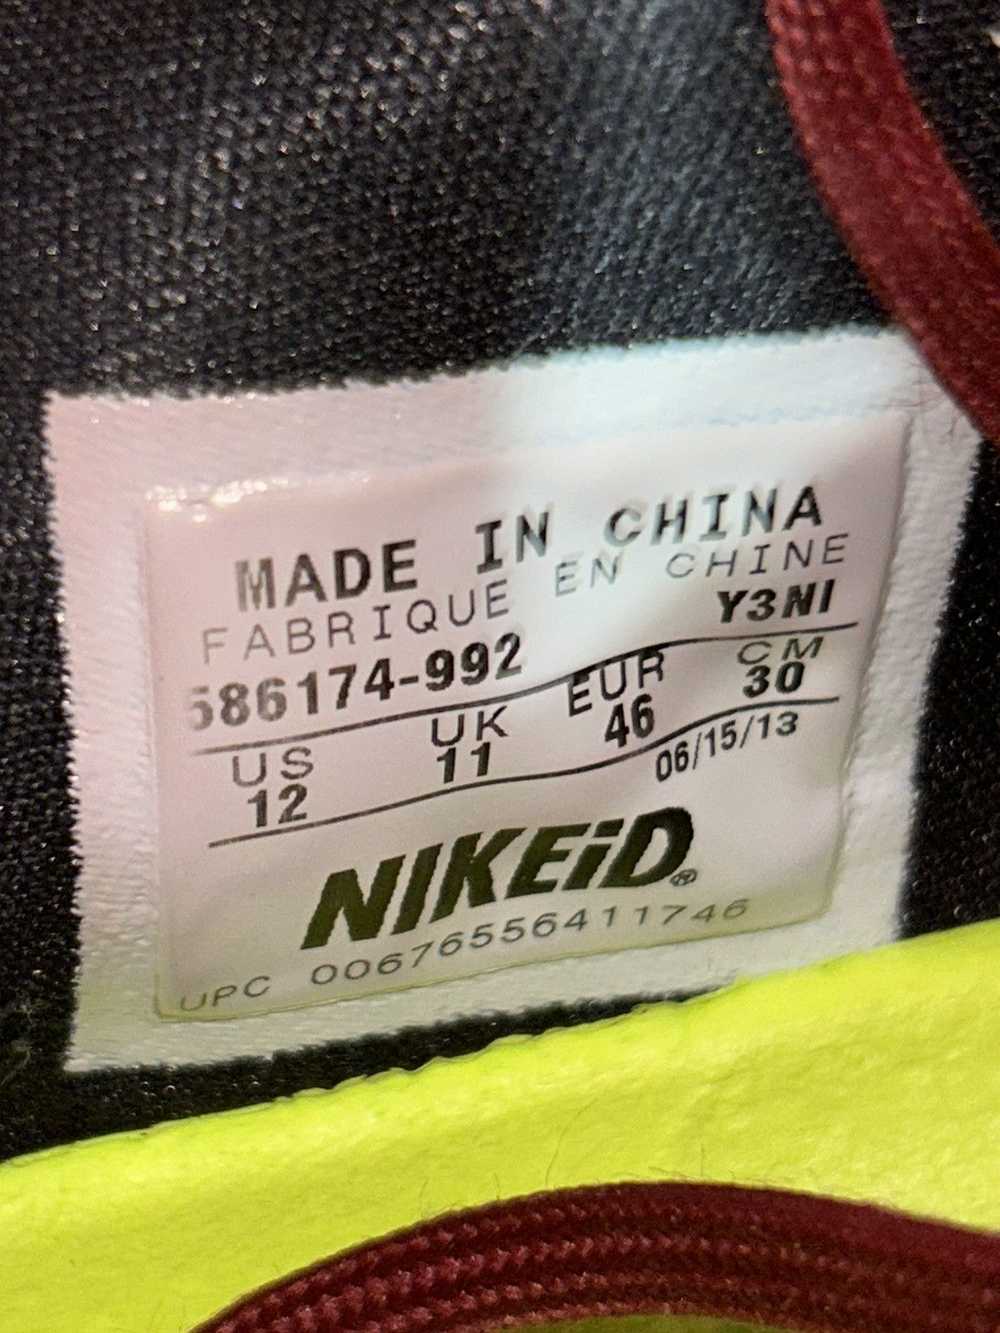 Nike Nike Zoom Kobe 8 ID 586174-992 size 12 NIKEi… - image 7